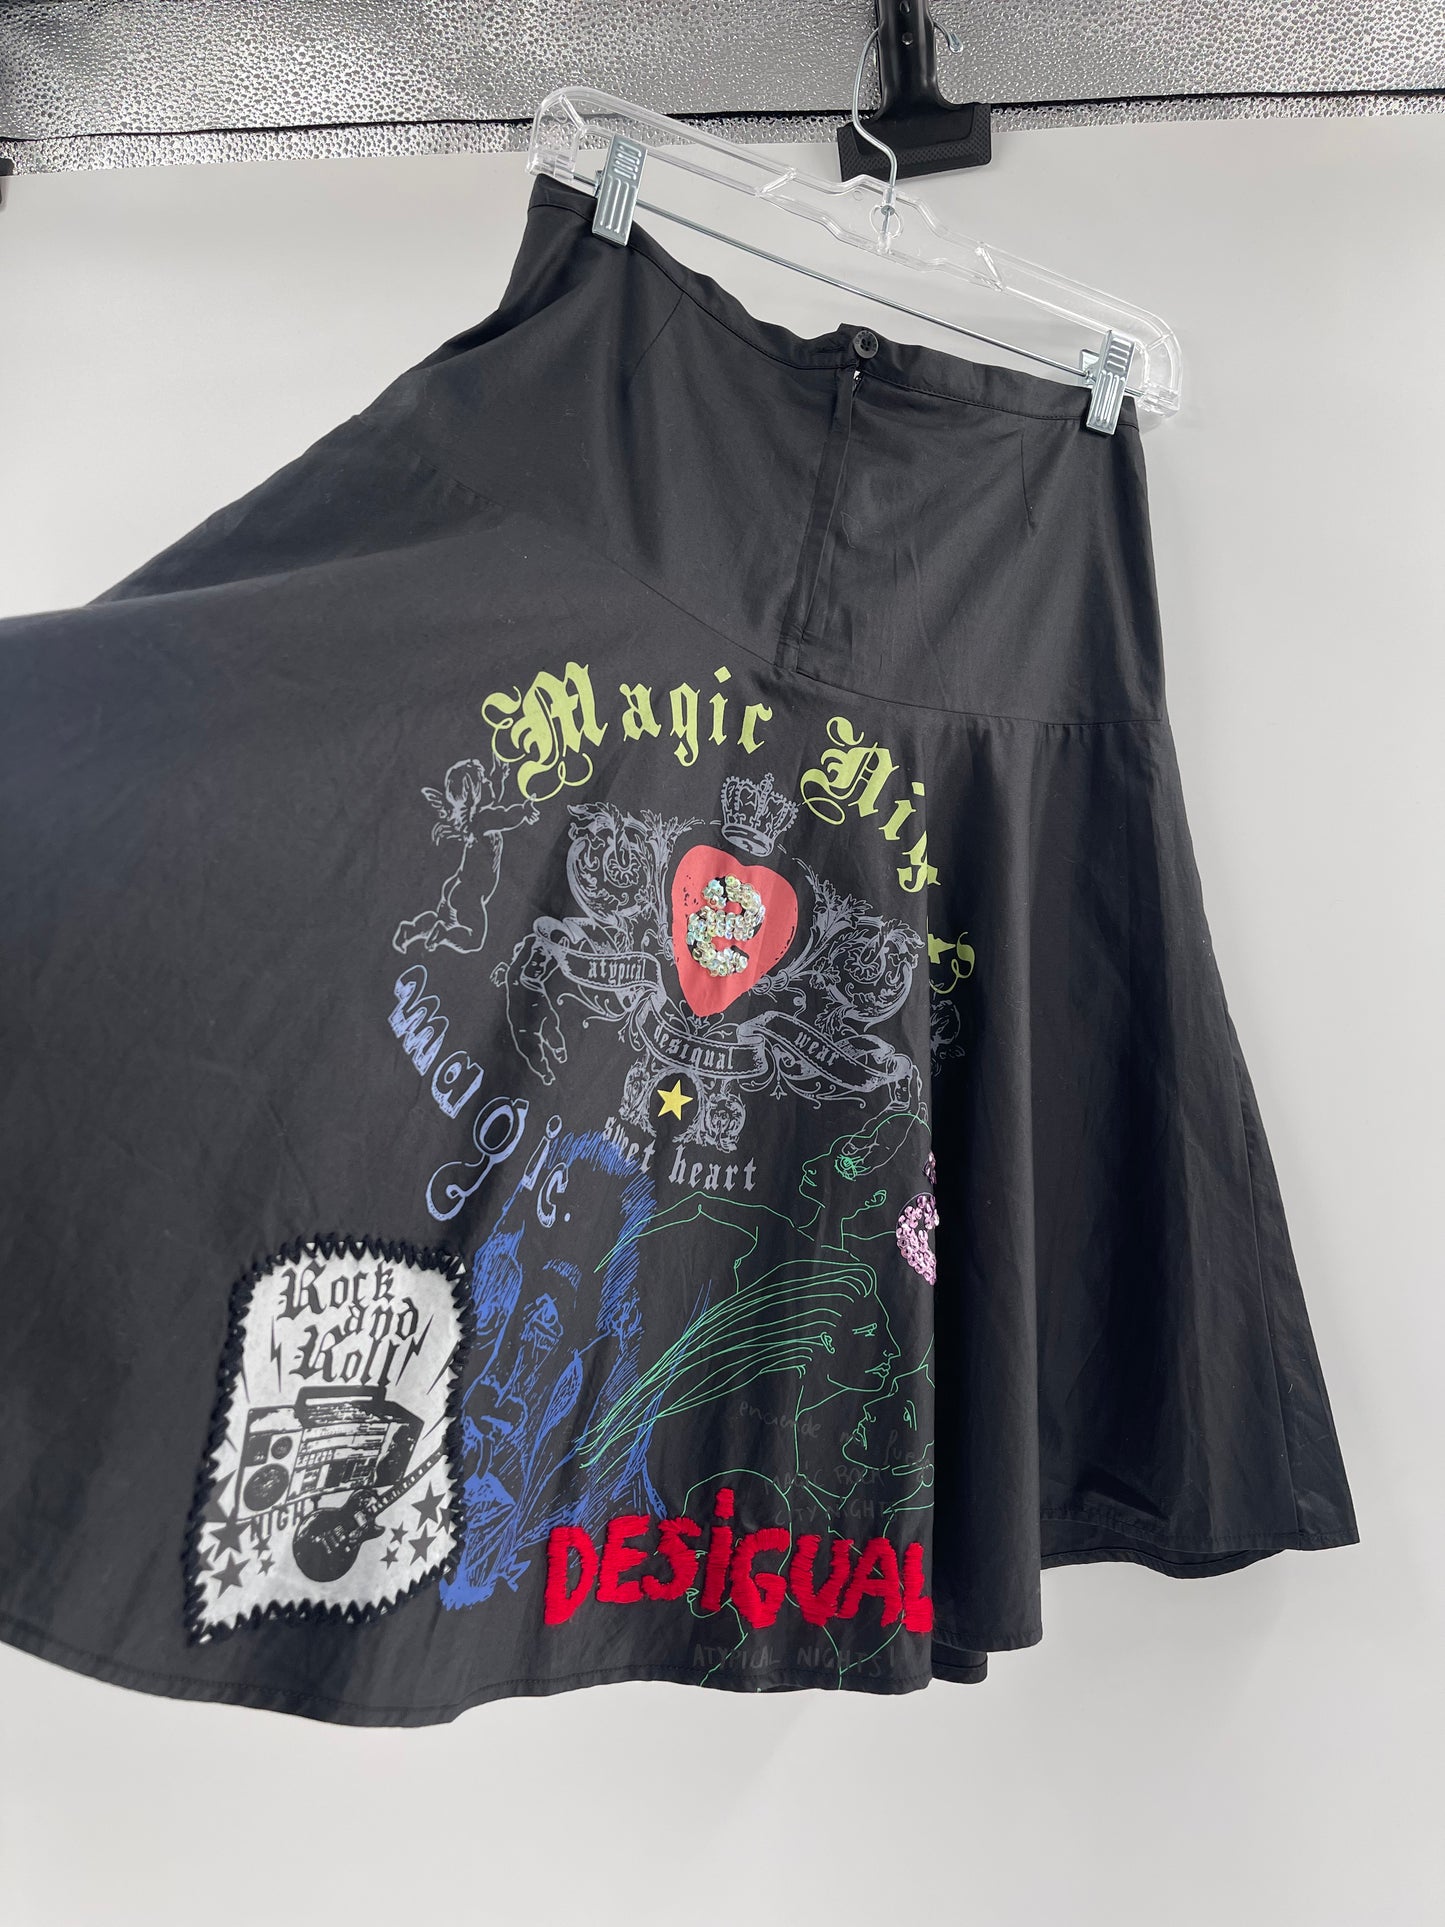 Deesigual - Punk Rock Embroidered Vintage Skirt (Size 36)